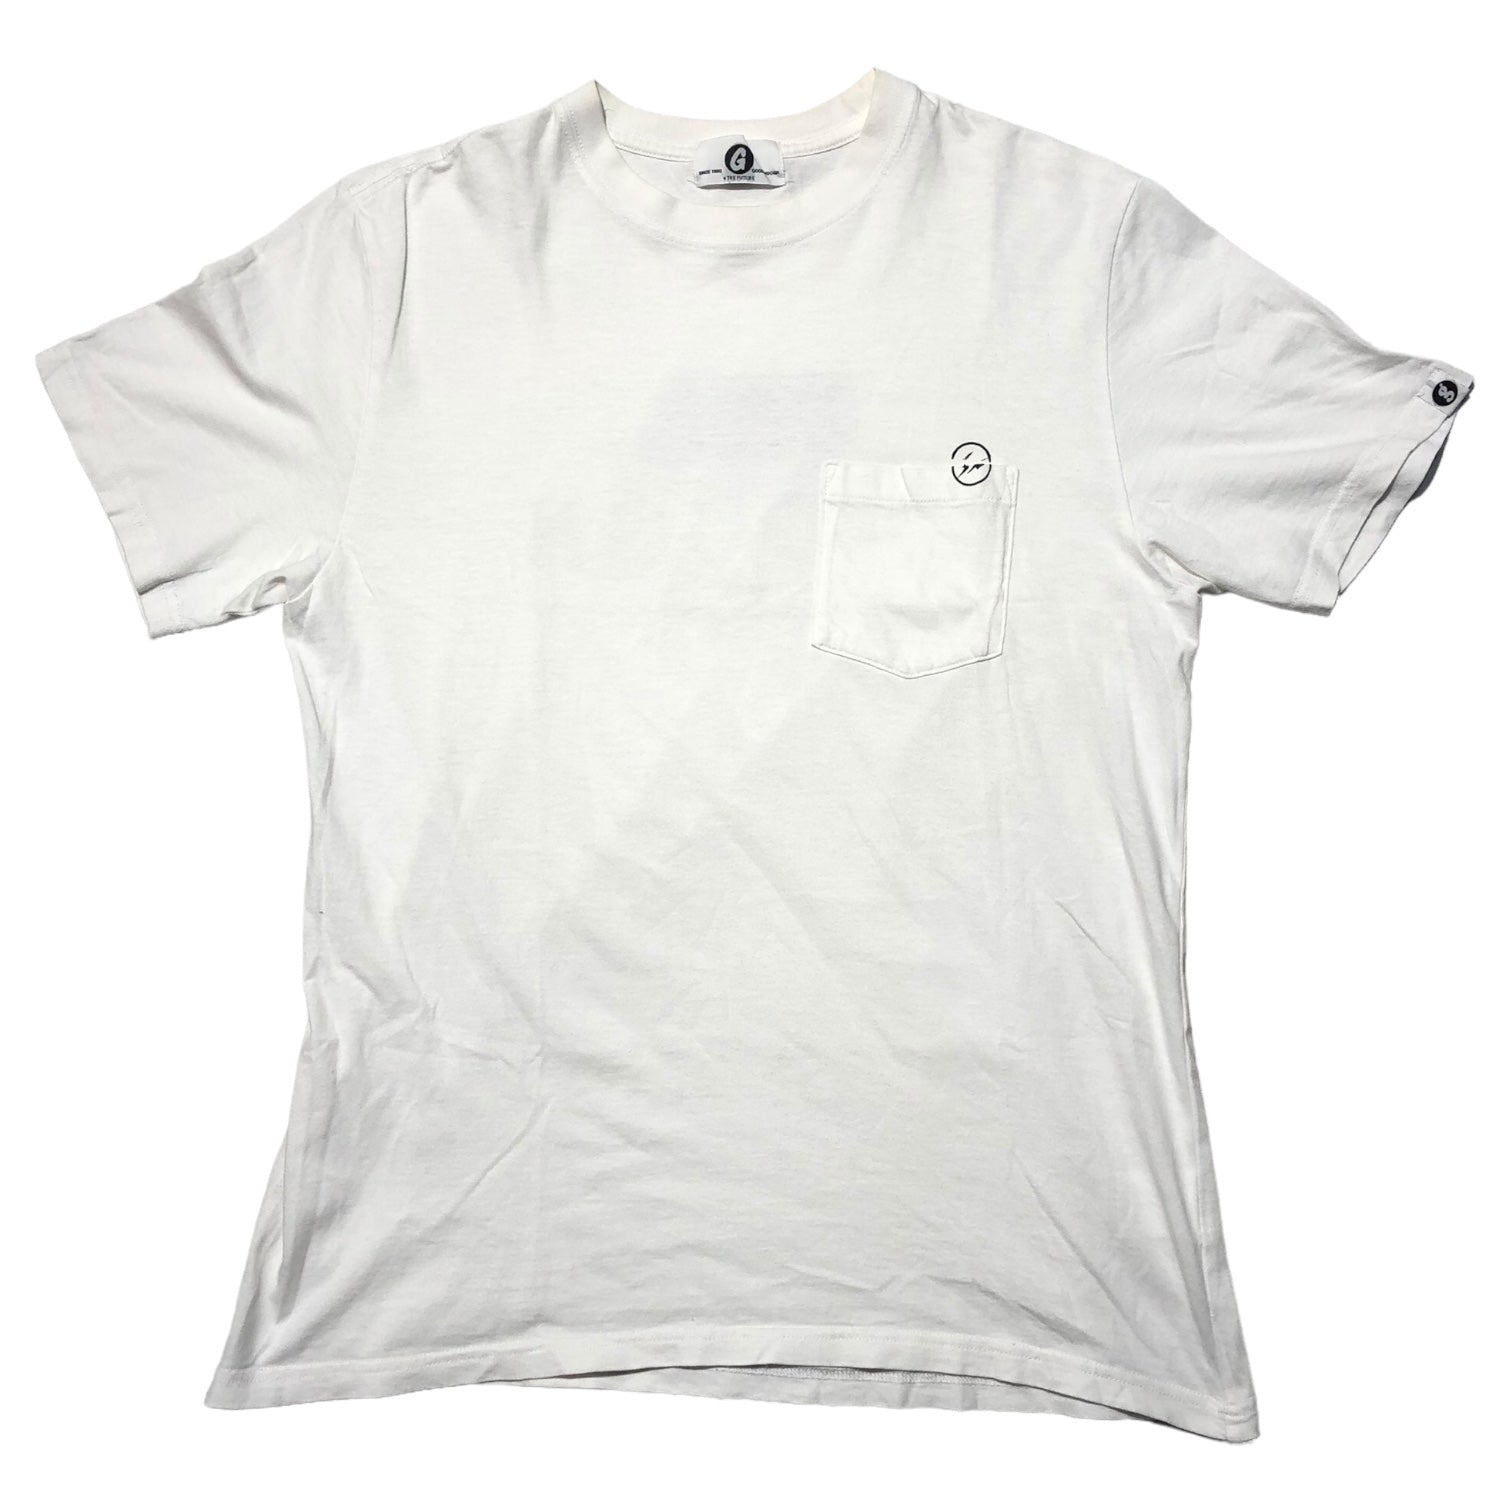 GOODENOUGH × FRAGMENT DESIGN(グッドイナフ×フラグメントデザイン) THE CONVENI Back print pocket T-shirt ザコンビニ バックプリントポケットTシャツ 2(M) ホワイト×ブラック エルメスオマージュ 稀少品